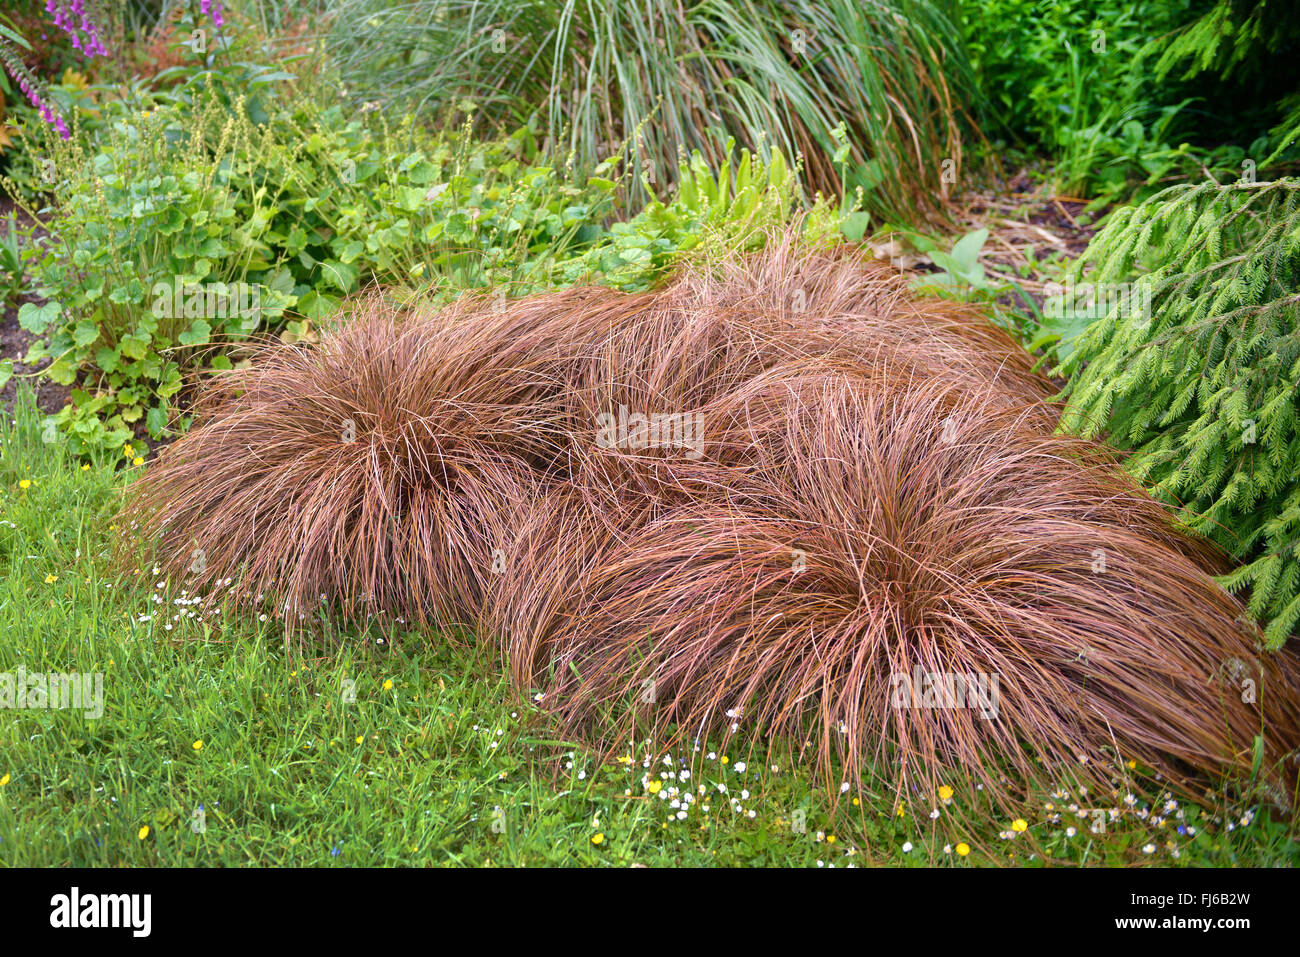 Neuseeland-Segge (Carex comans 'Bronze Form', Carex comans Bronze Form), Sorte Bronze Form, Vereinigtes Königreich, England Stockfoto